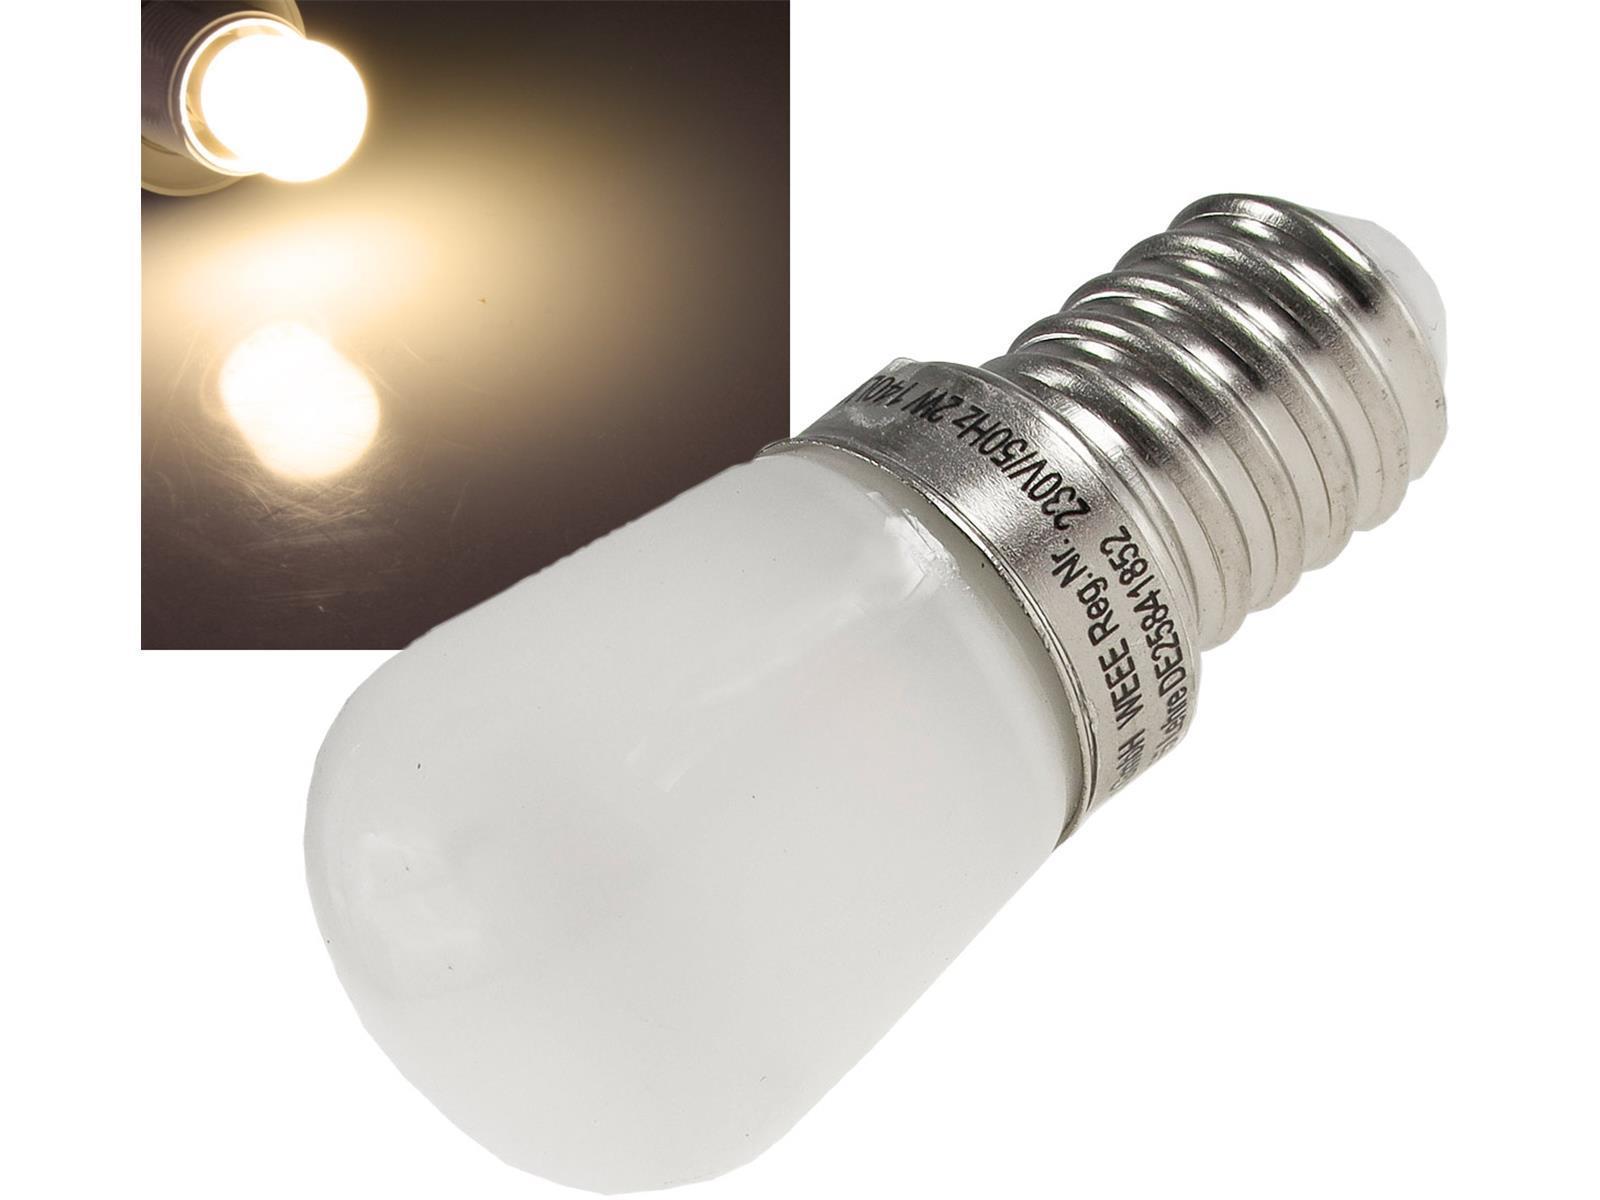 LED Lampe E14, 1 SMD LED 23x51mm klein3000k, 190lm, 120°, 230V/2W, warmweiß